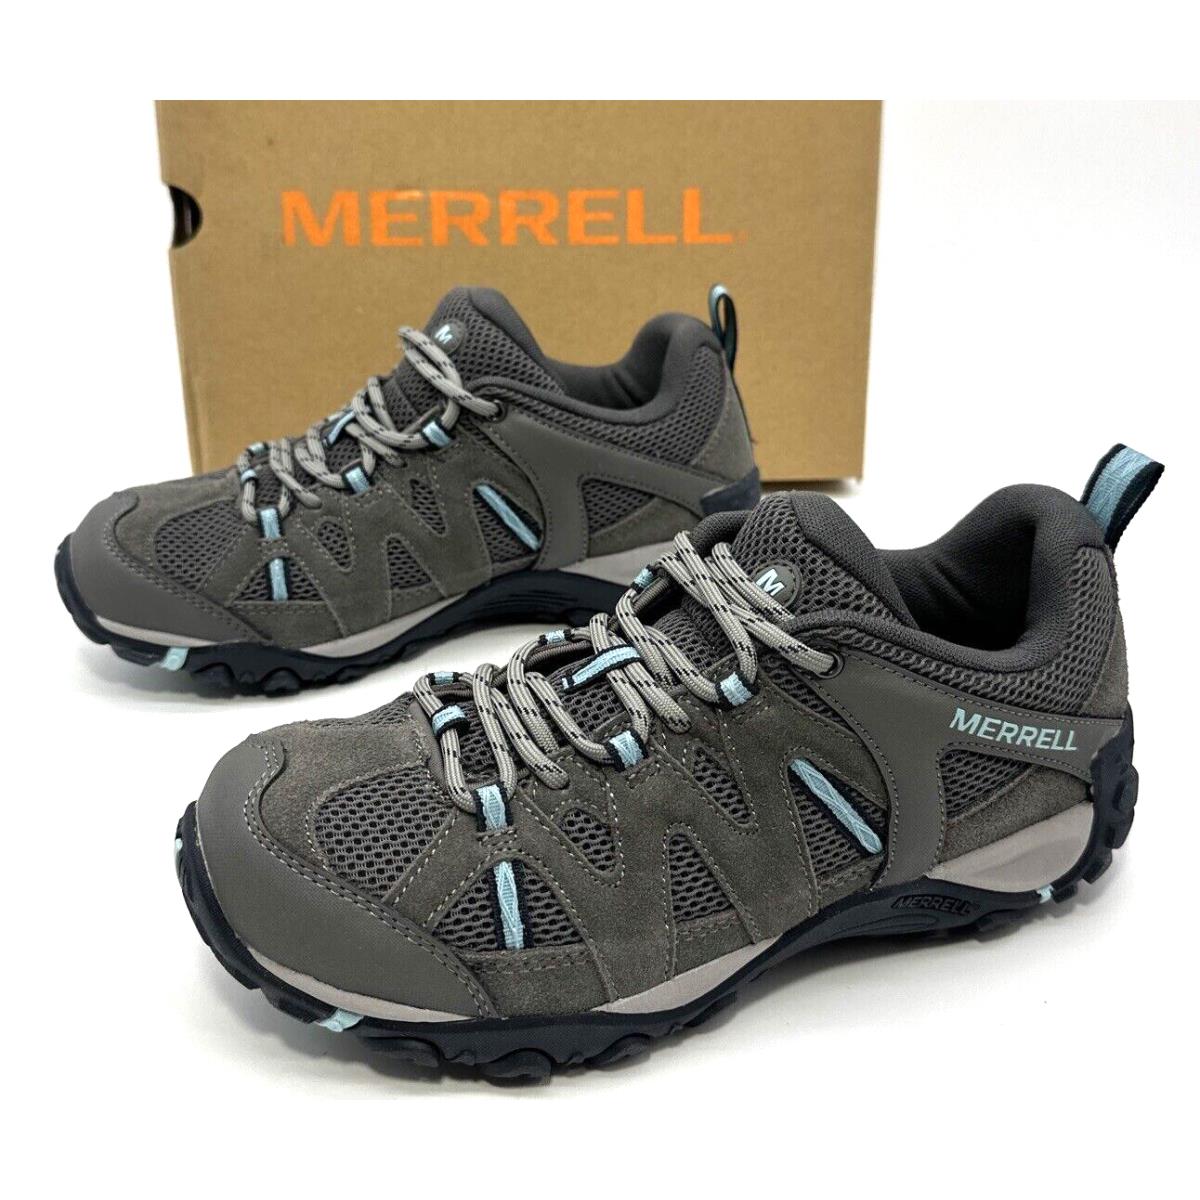 Merrell Deverta 2 Womens Size 7.5 M Hiking Trail Shoe Waterproof Lace Up